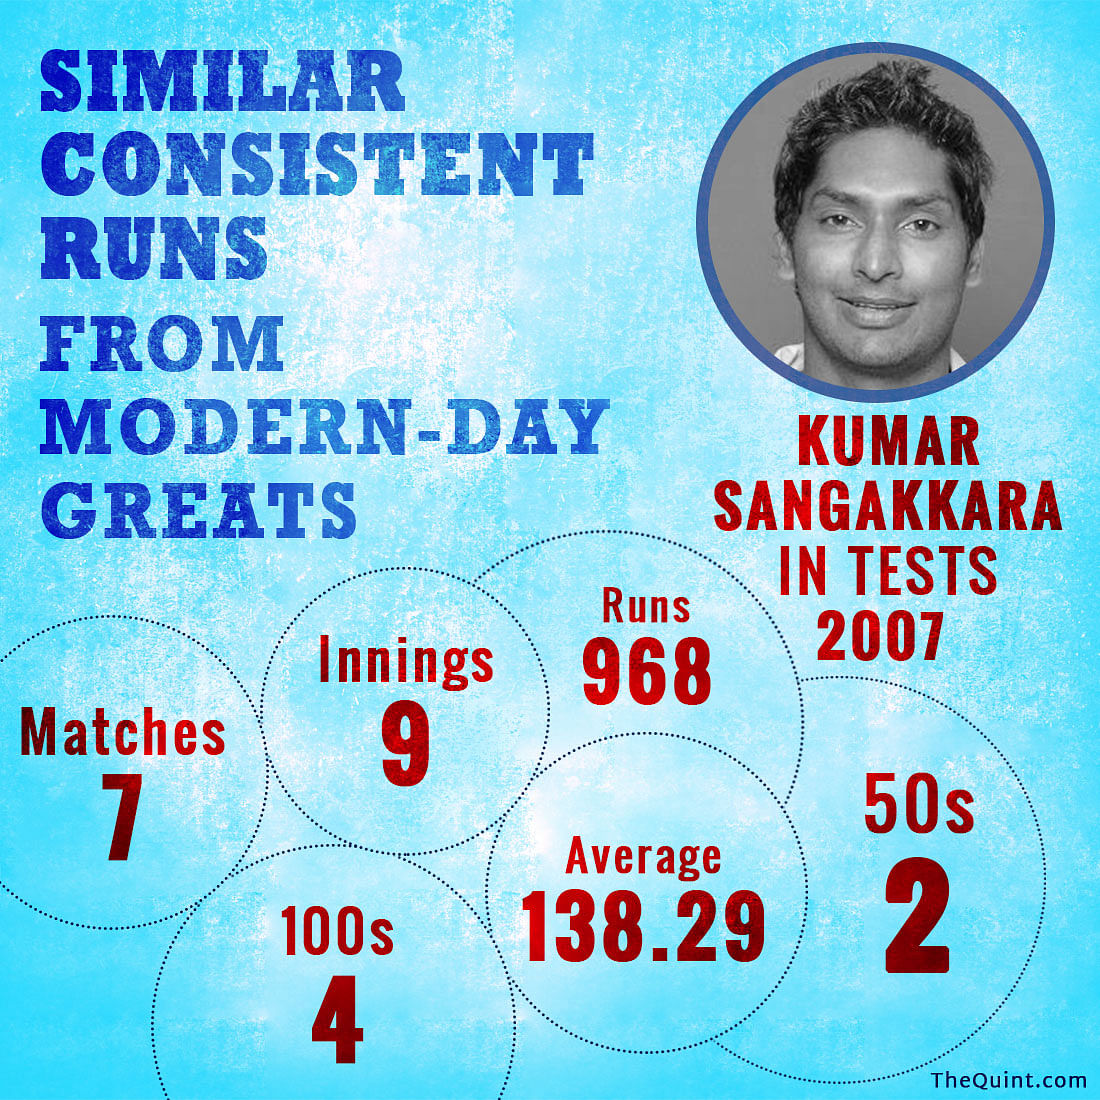 Here’s comparing Virat Kohli’s blistering run this year to that of legends like Viv Richards and Sachin Tendulkar.